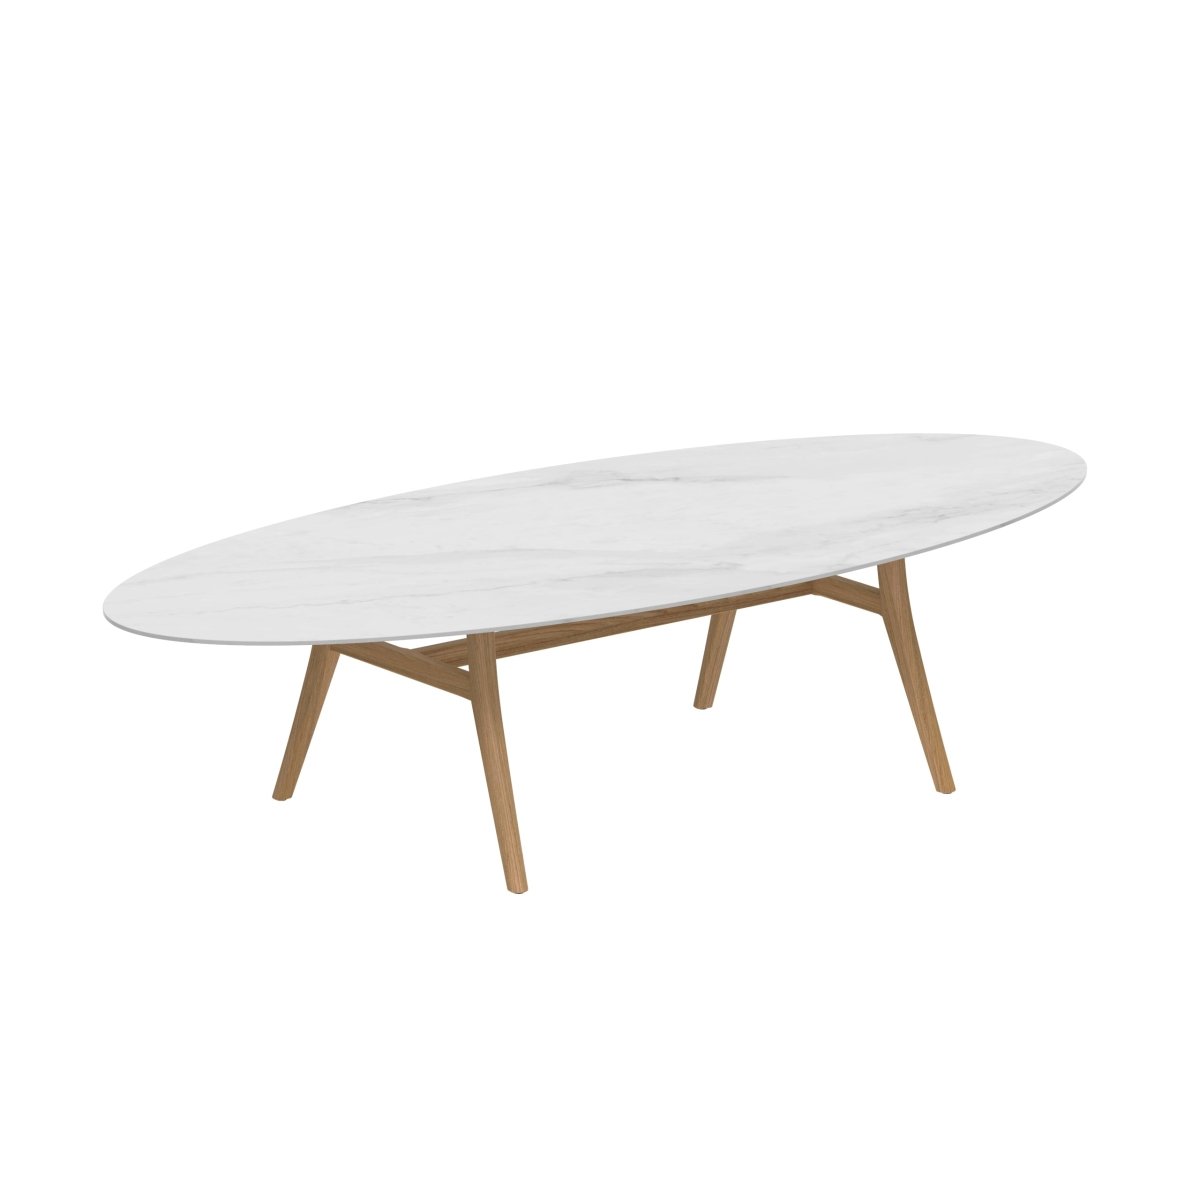 Zidiz Oval Ceramic Table